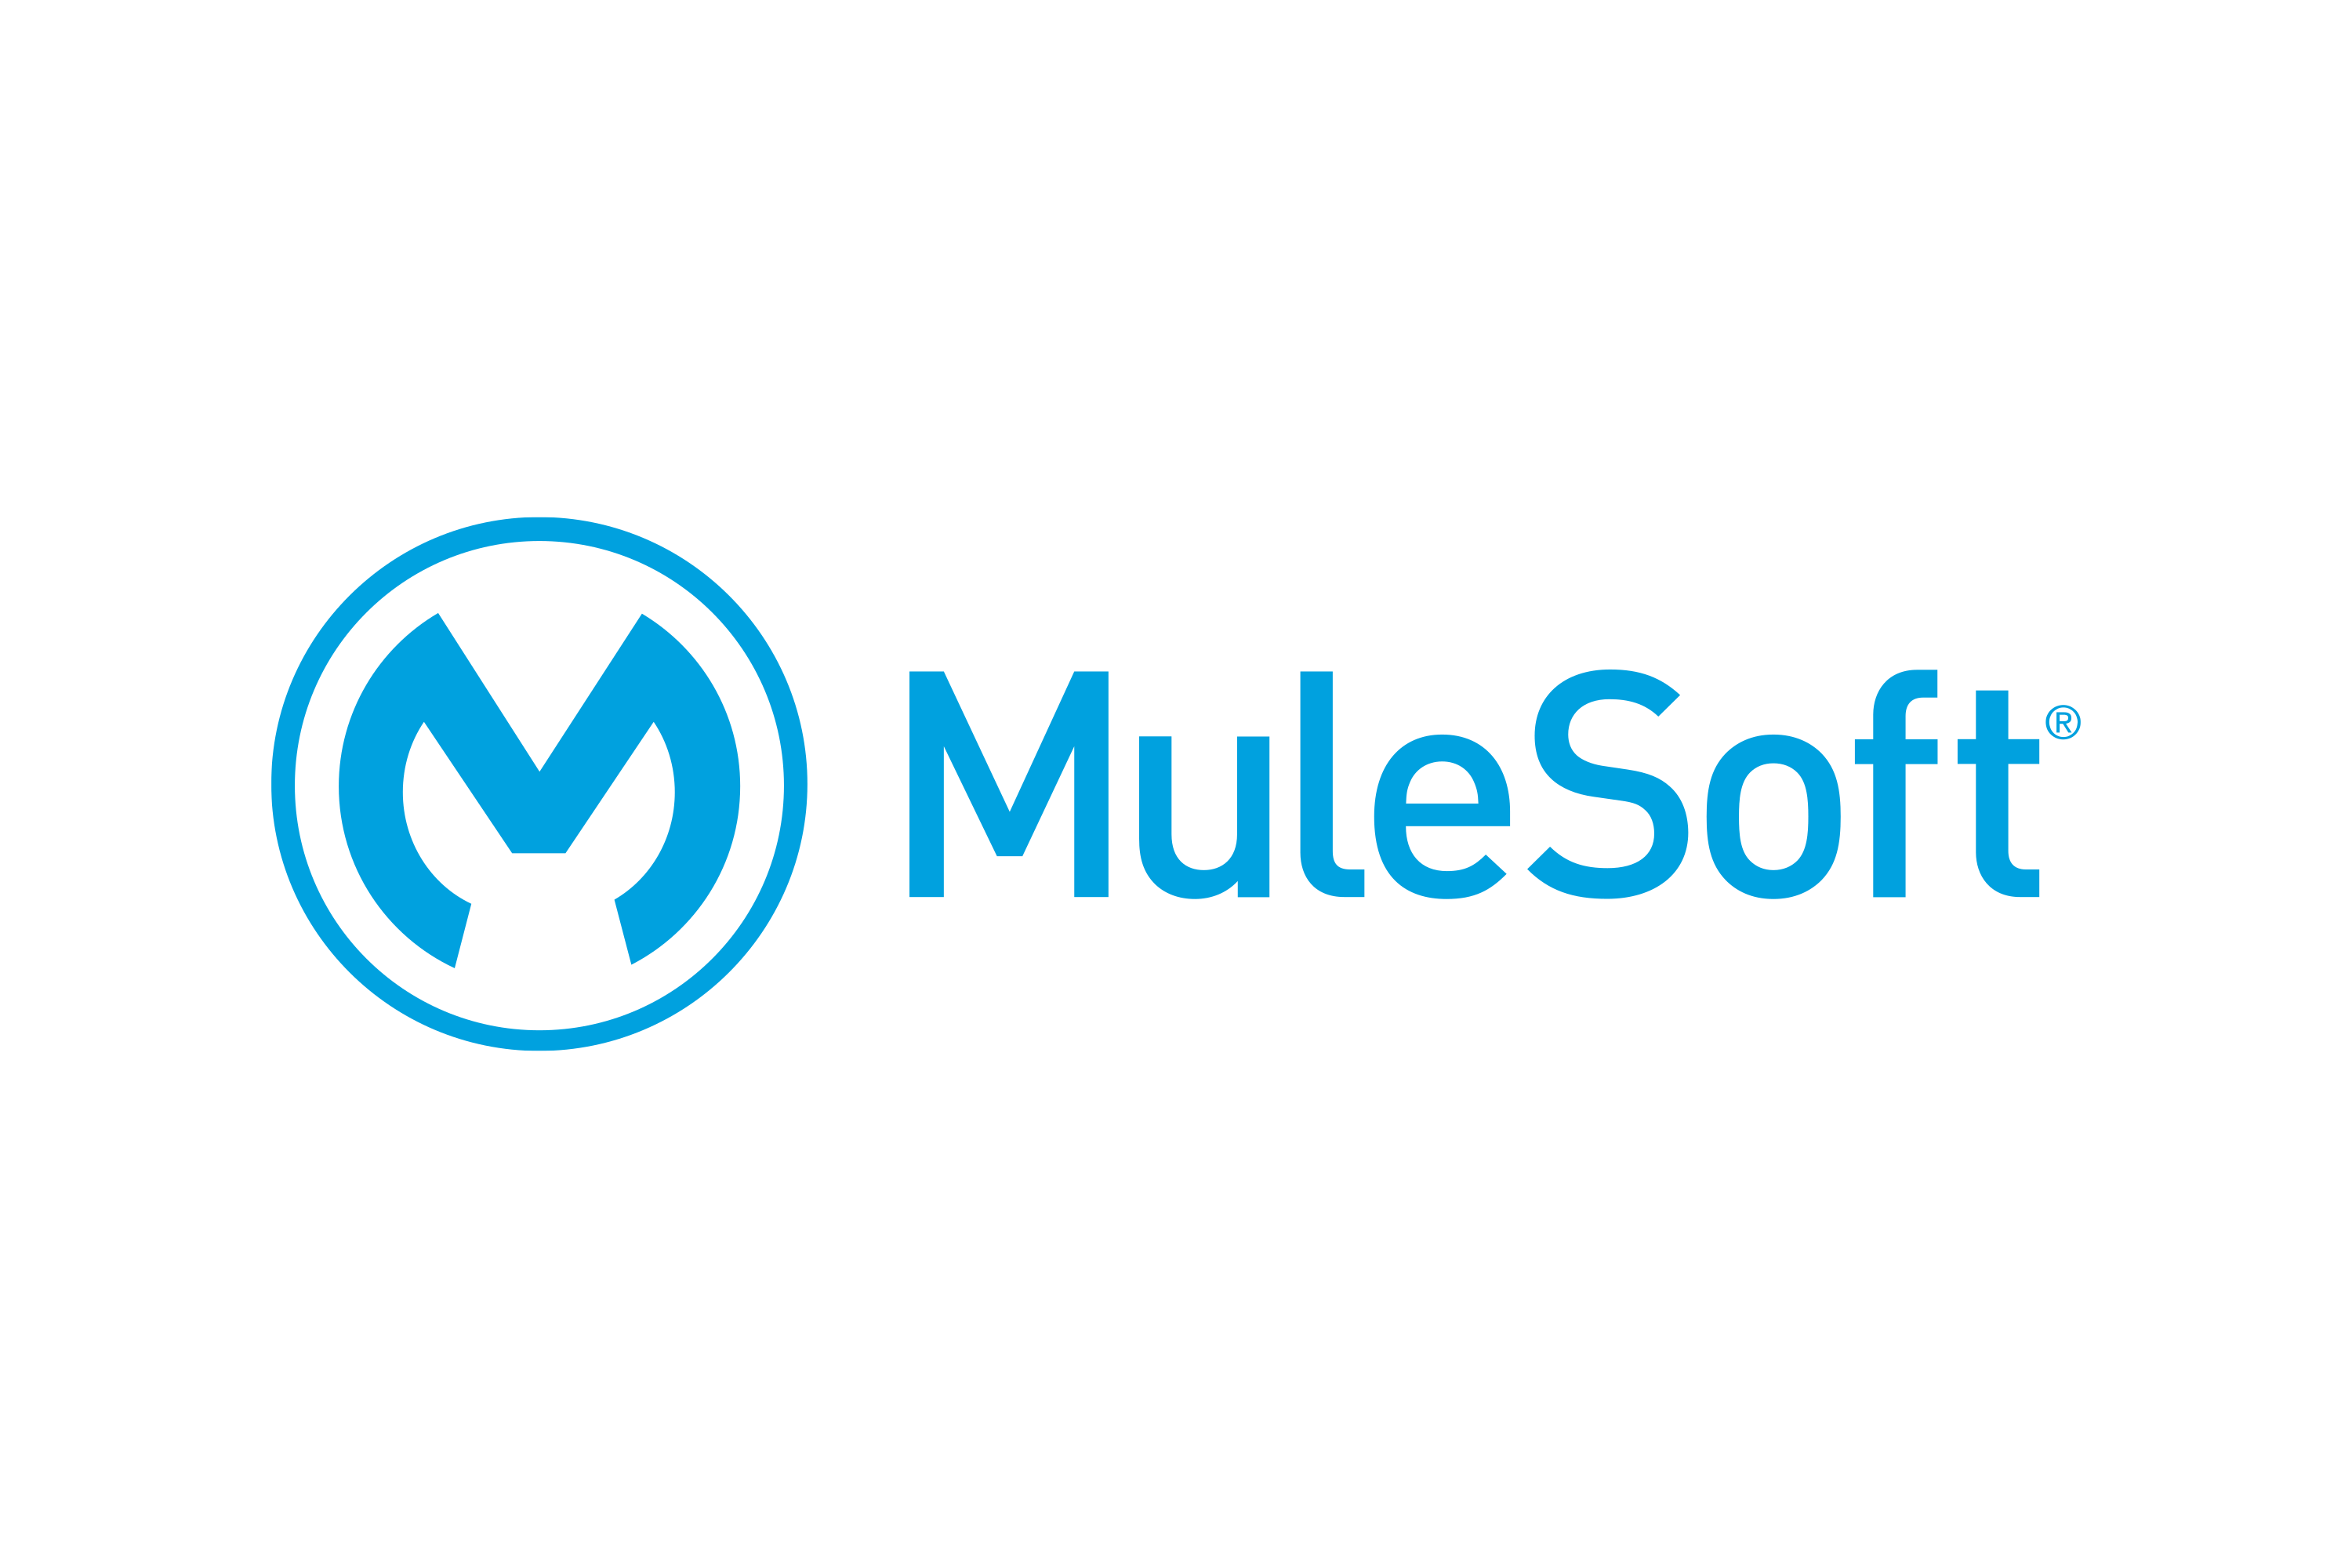 mulesoft software download